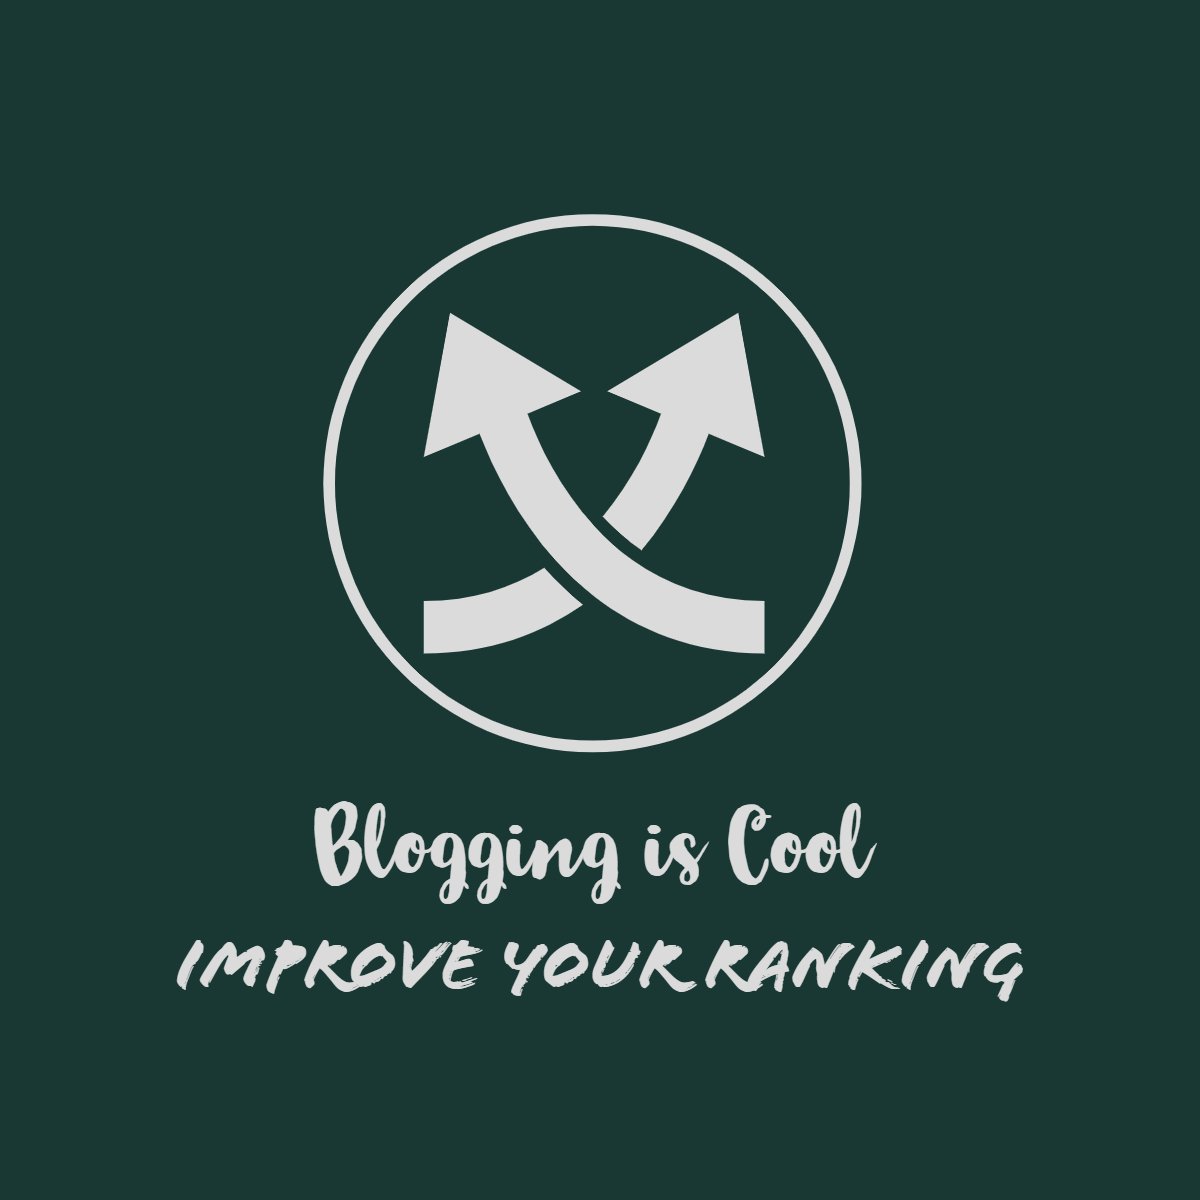 bloggingiscool.com is a blog that educates bloggers on better blogging